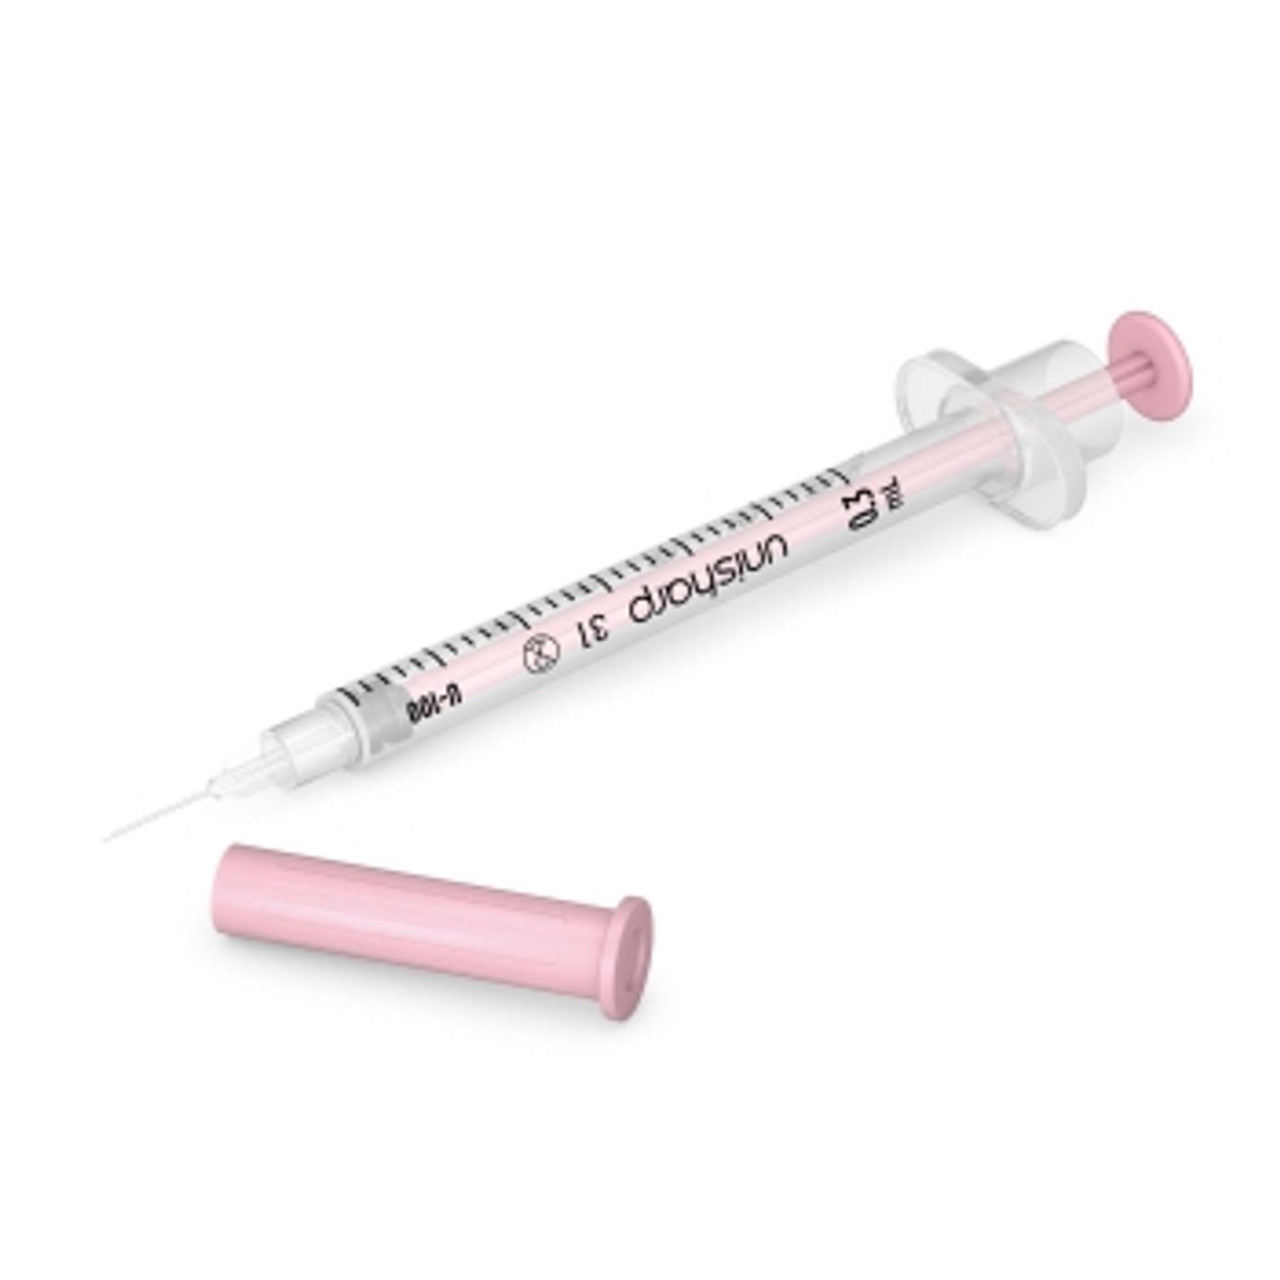 Terumo 1ml Insulin Syringe & Needle 26G x 13mm x 100 – Medisave UK